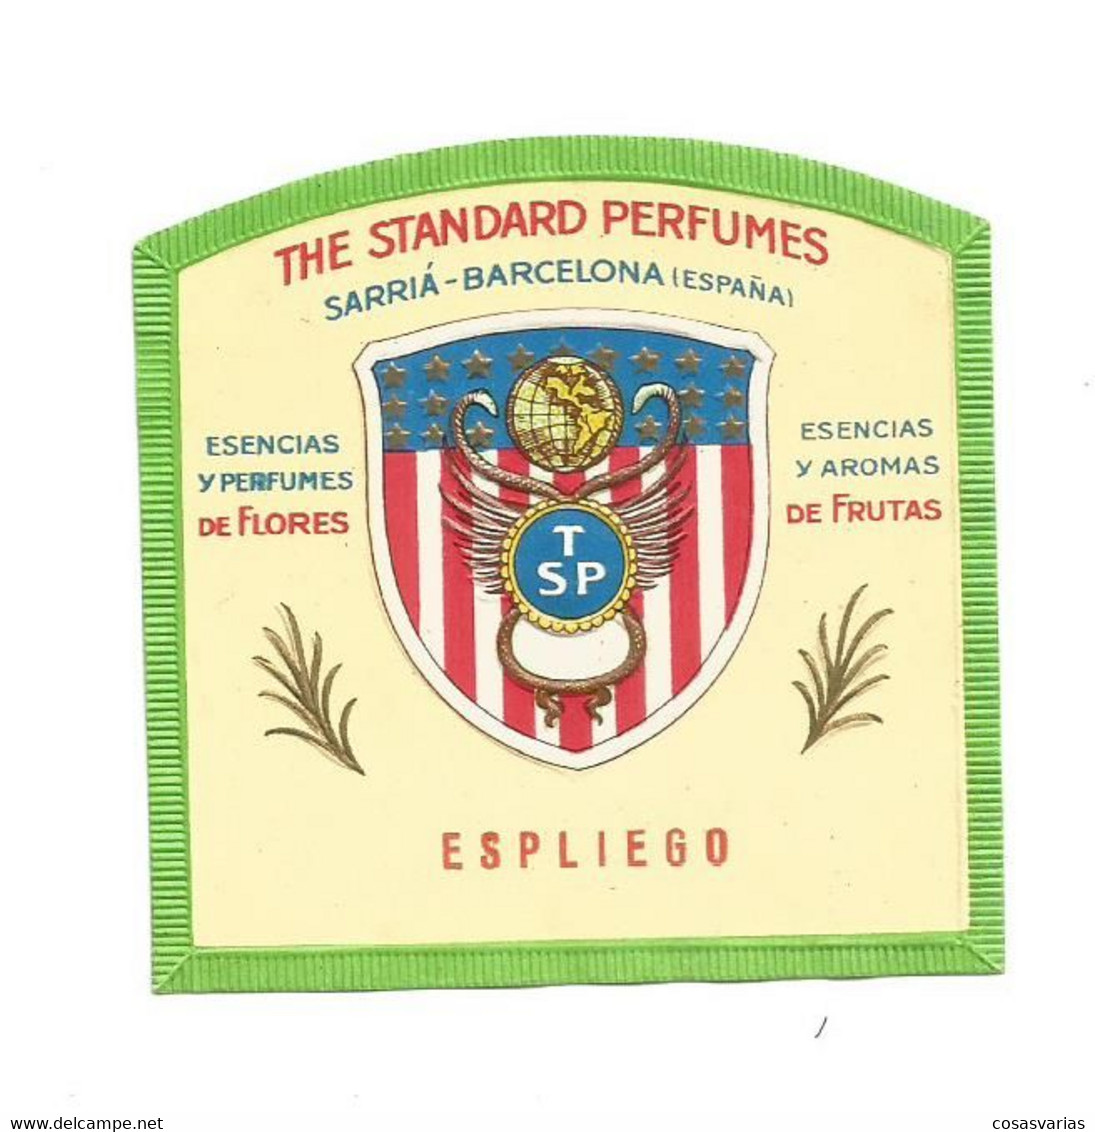 ESPLIEGO  THE STANDARD PERFUMES ÉTIQUETTE PARFUMERIE PARFUM LABEL ETIKETT PARFÜMERIE ETICHETTA PROFUMERIA - Etiquettes